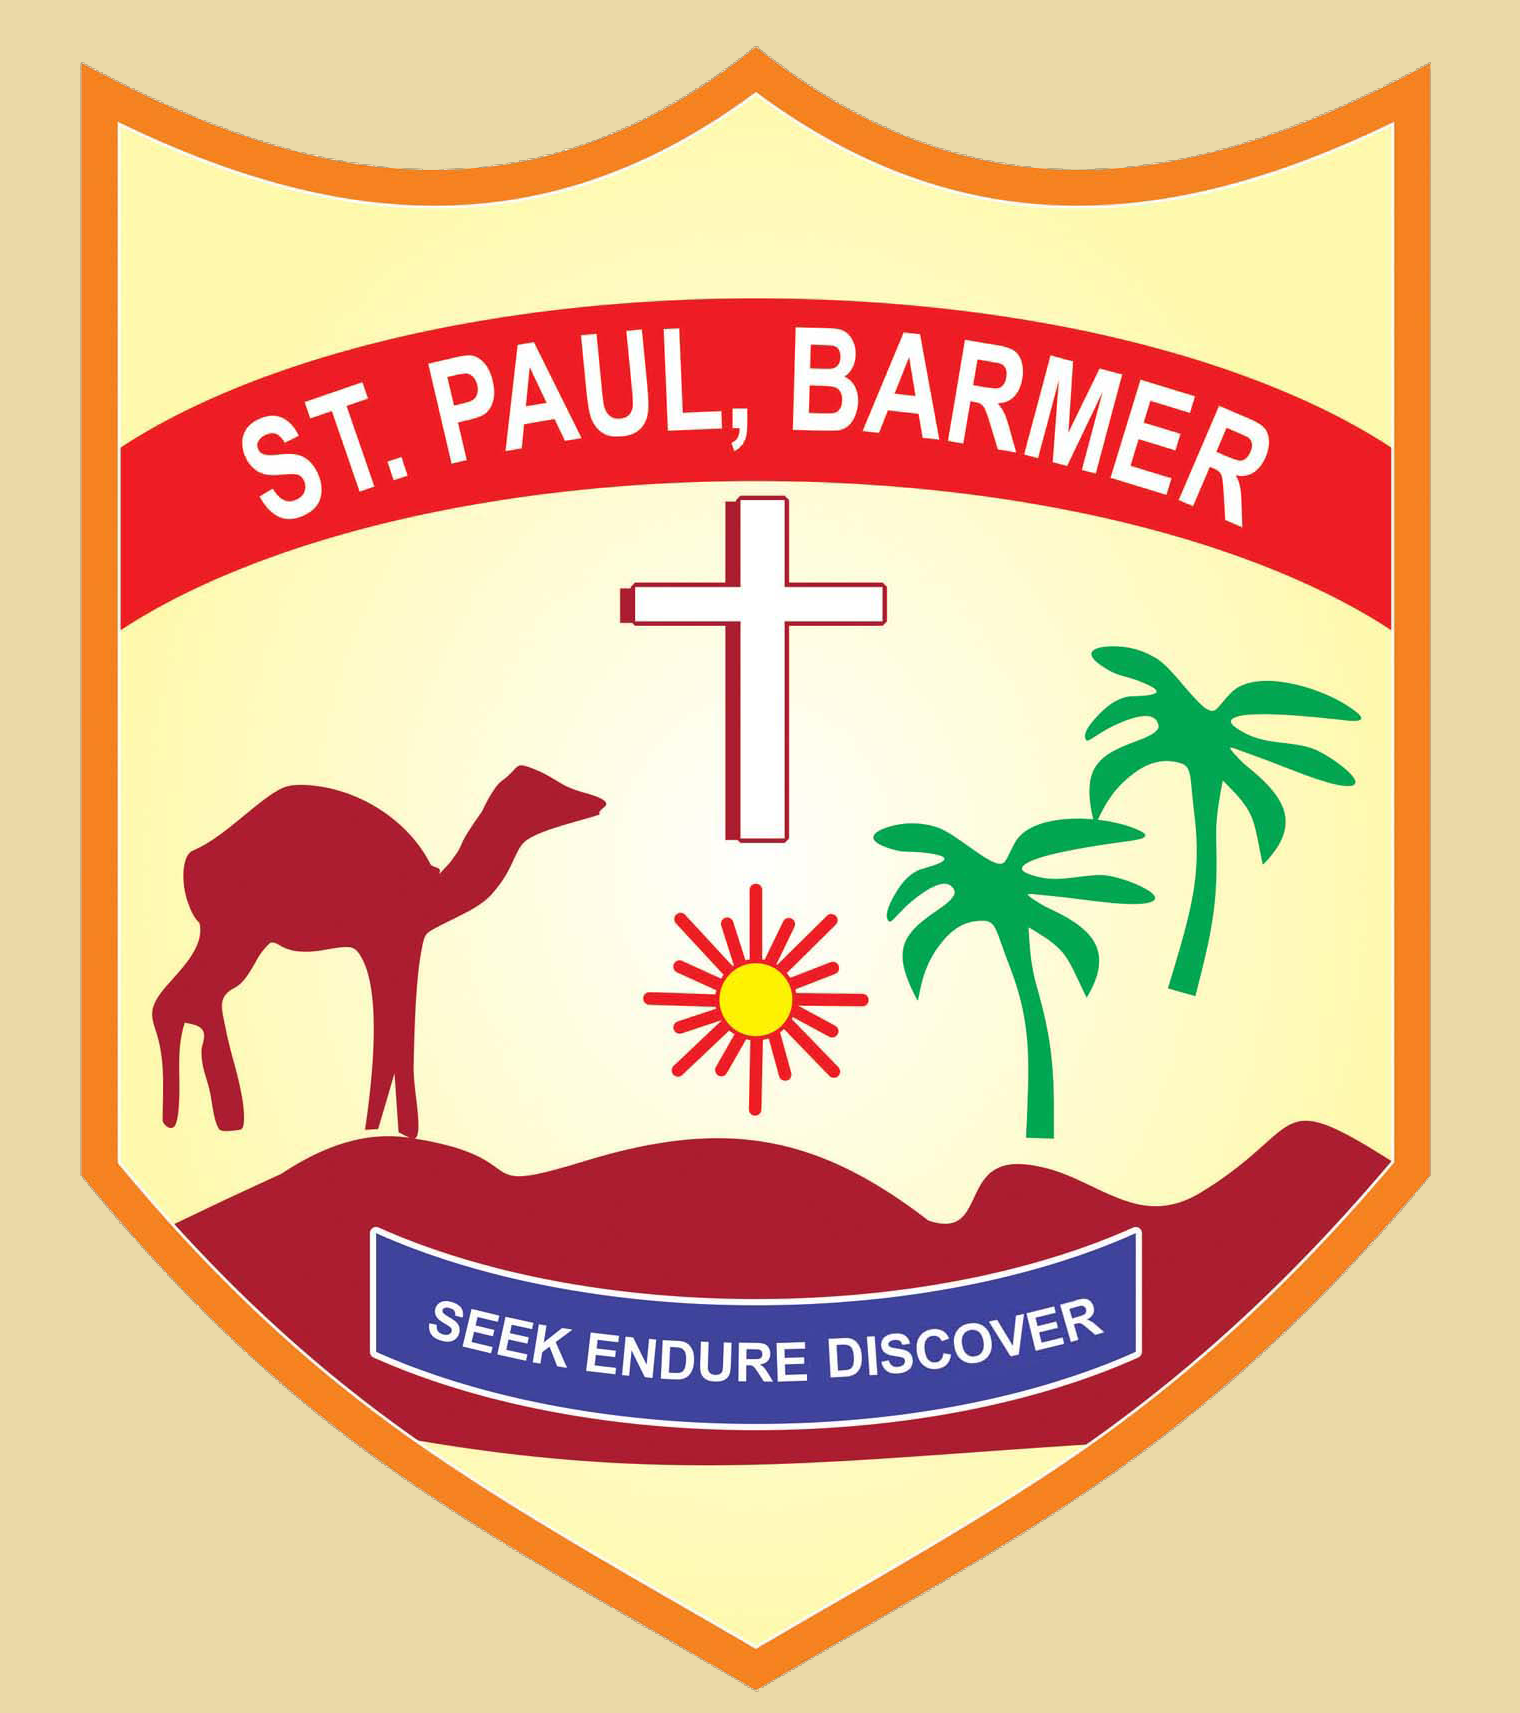 St. Paul School, Barmer